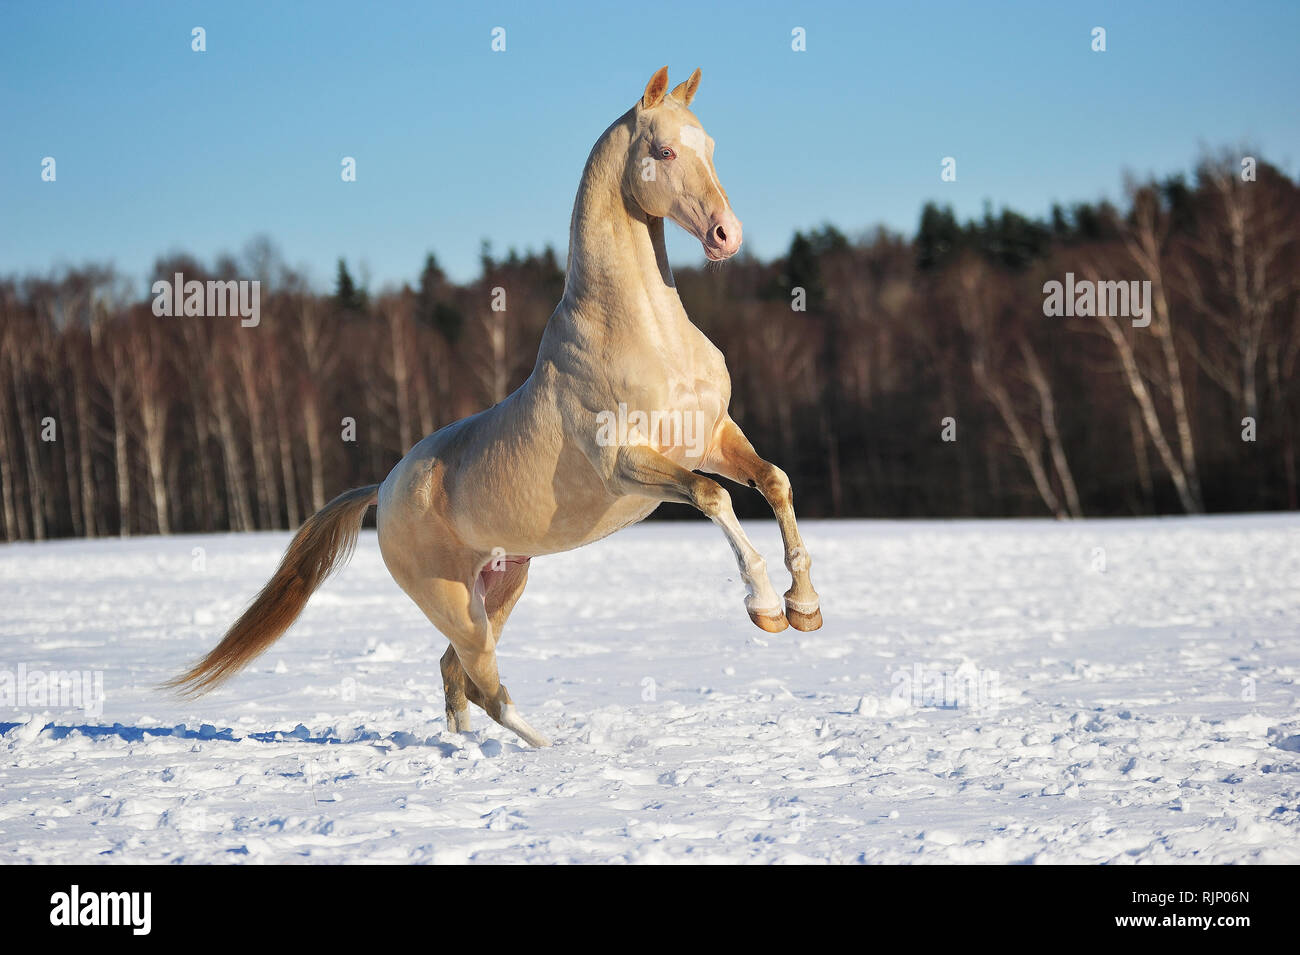 Akhal teke stallion rears in winter field. Horizontal, side view, in motion. Stock Photo